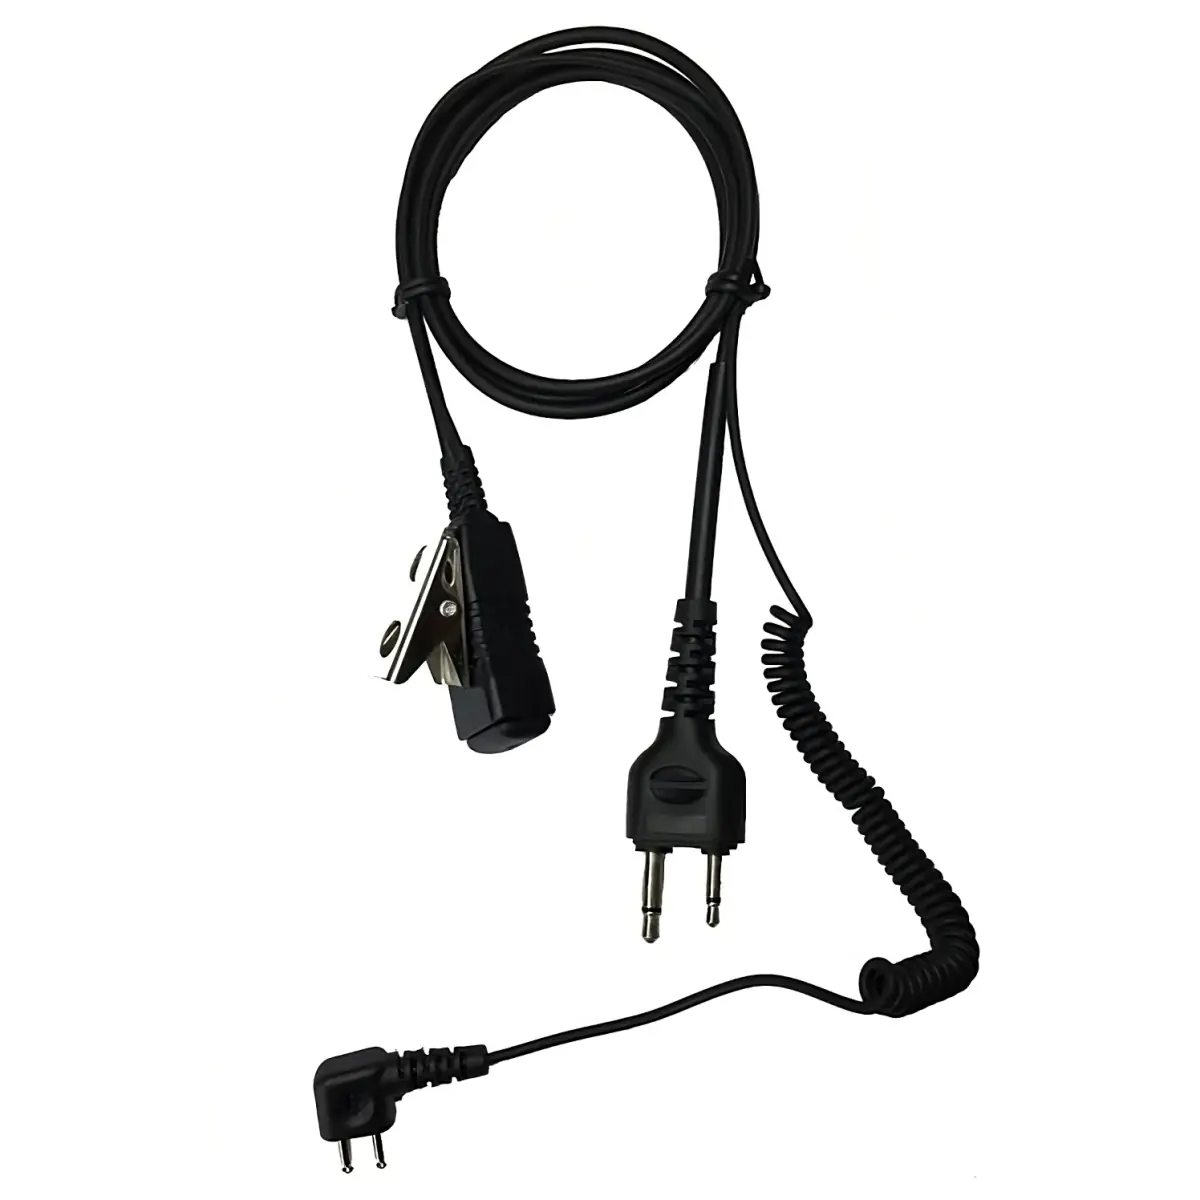 Walkie-Talkie Midland G9 PRO + headset